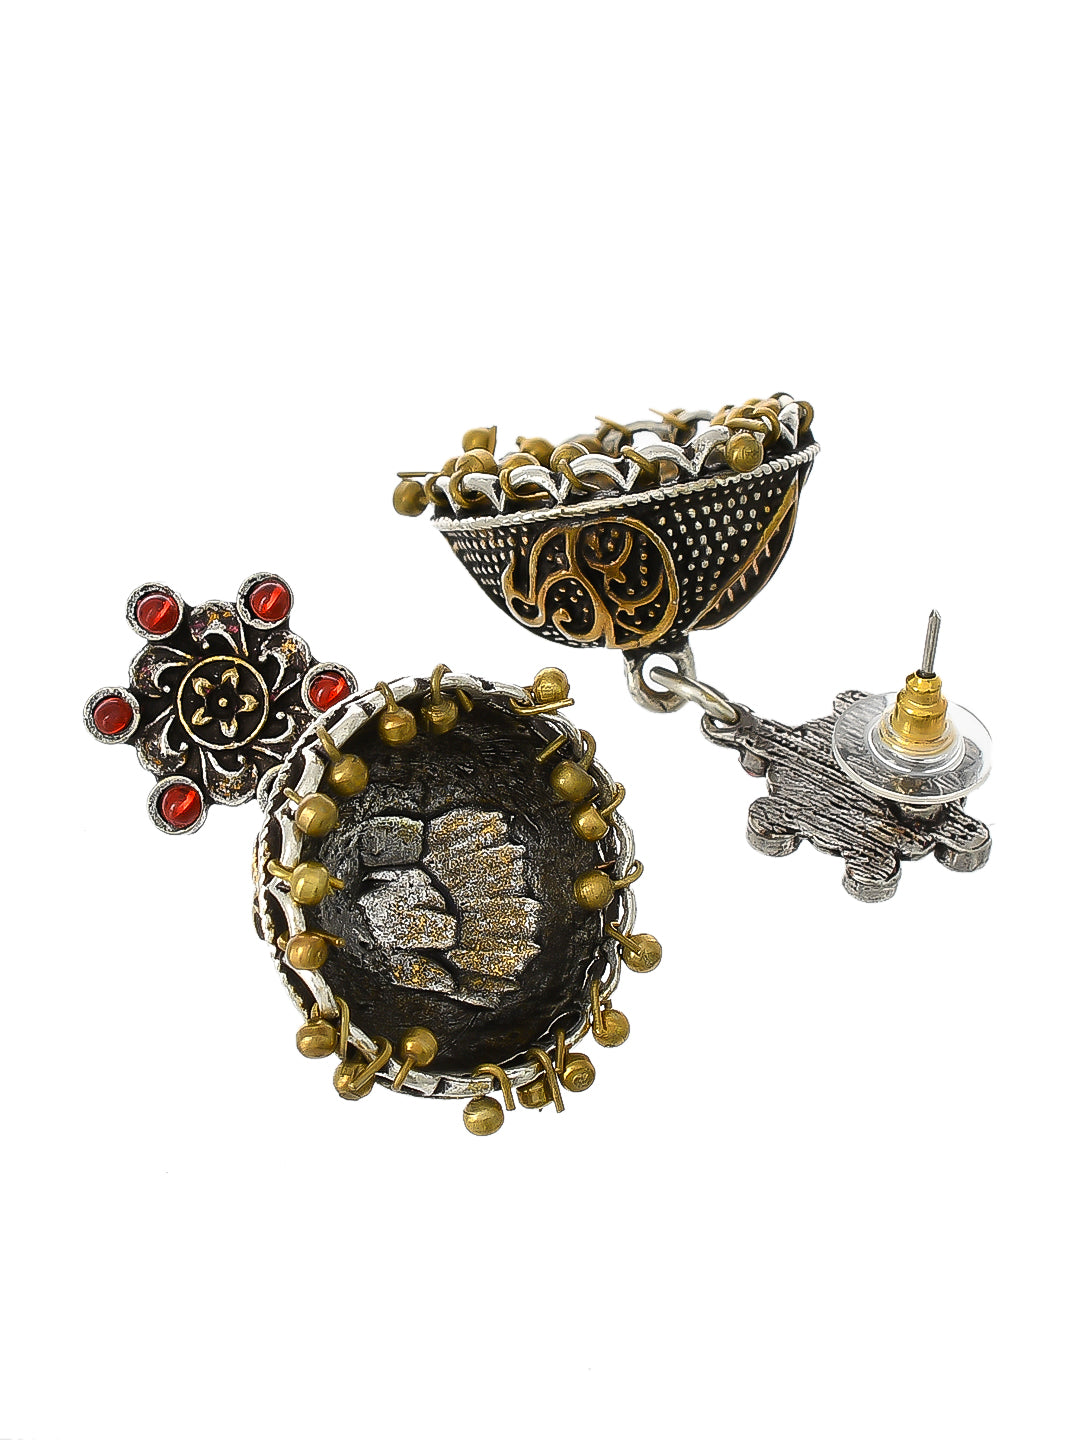 Oxidised silver jhumki earrings